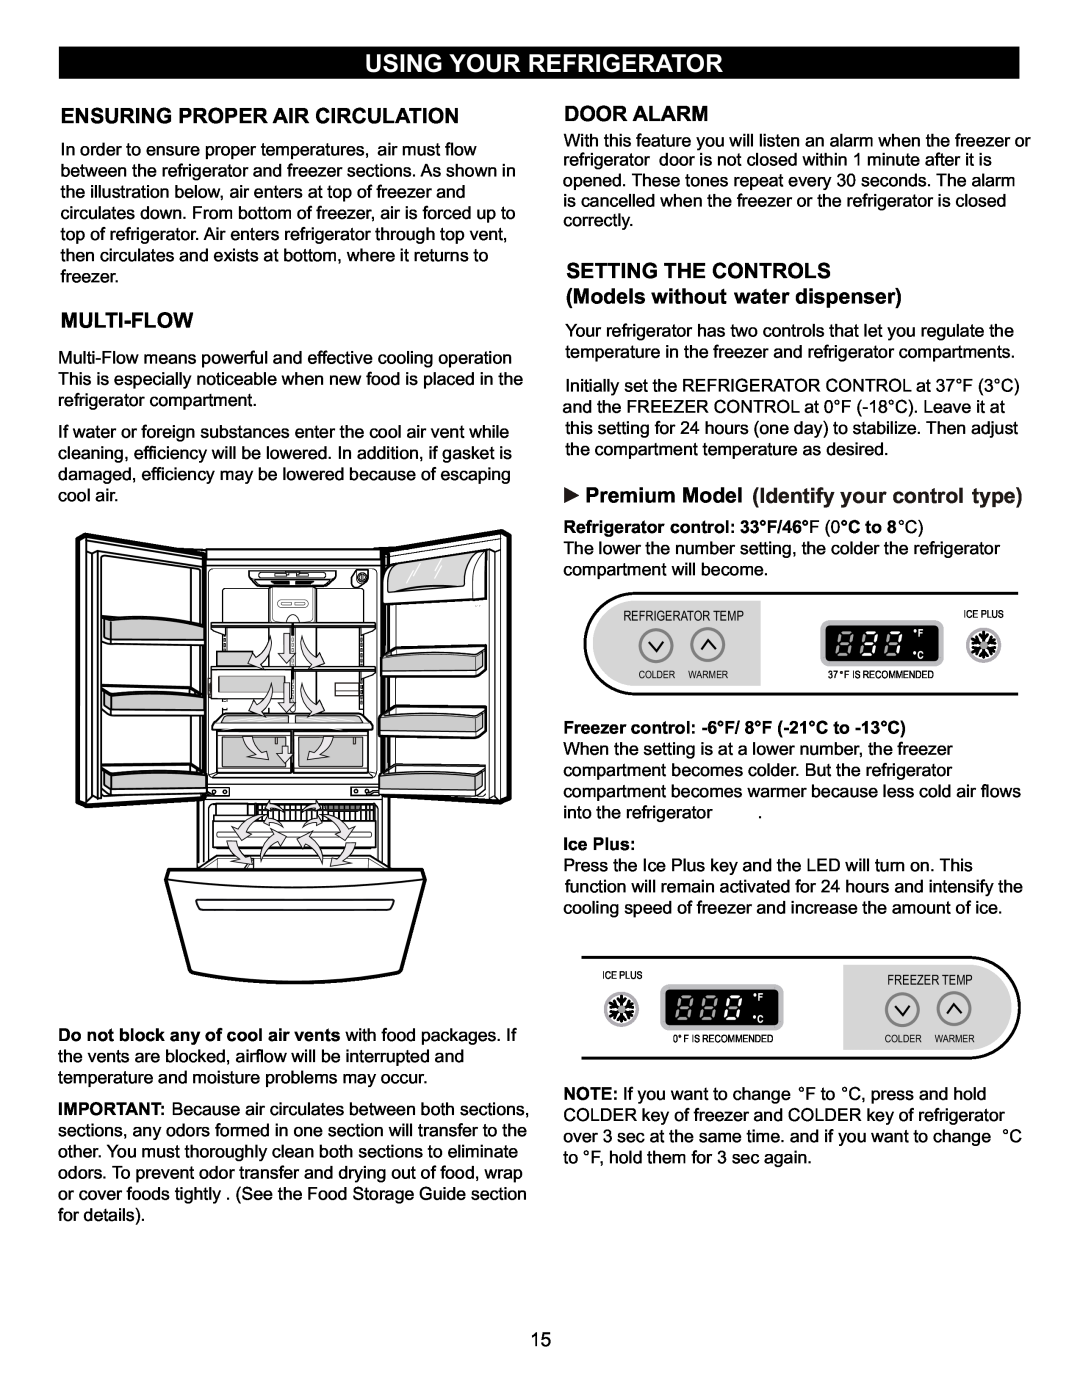 LG Electronics LFC23760 owner manual Using Your Refrigerator, Ensuring Proper Air Circulation, Multi-Flow, Door Alarm 